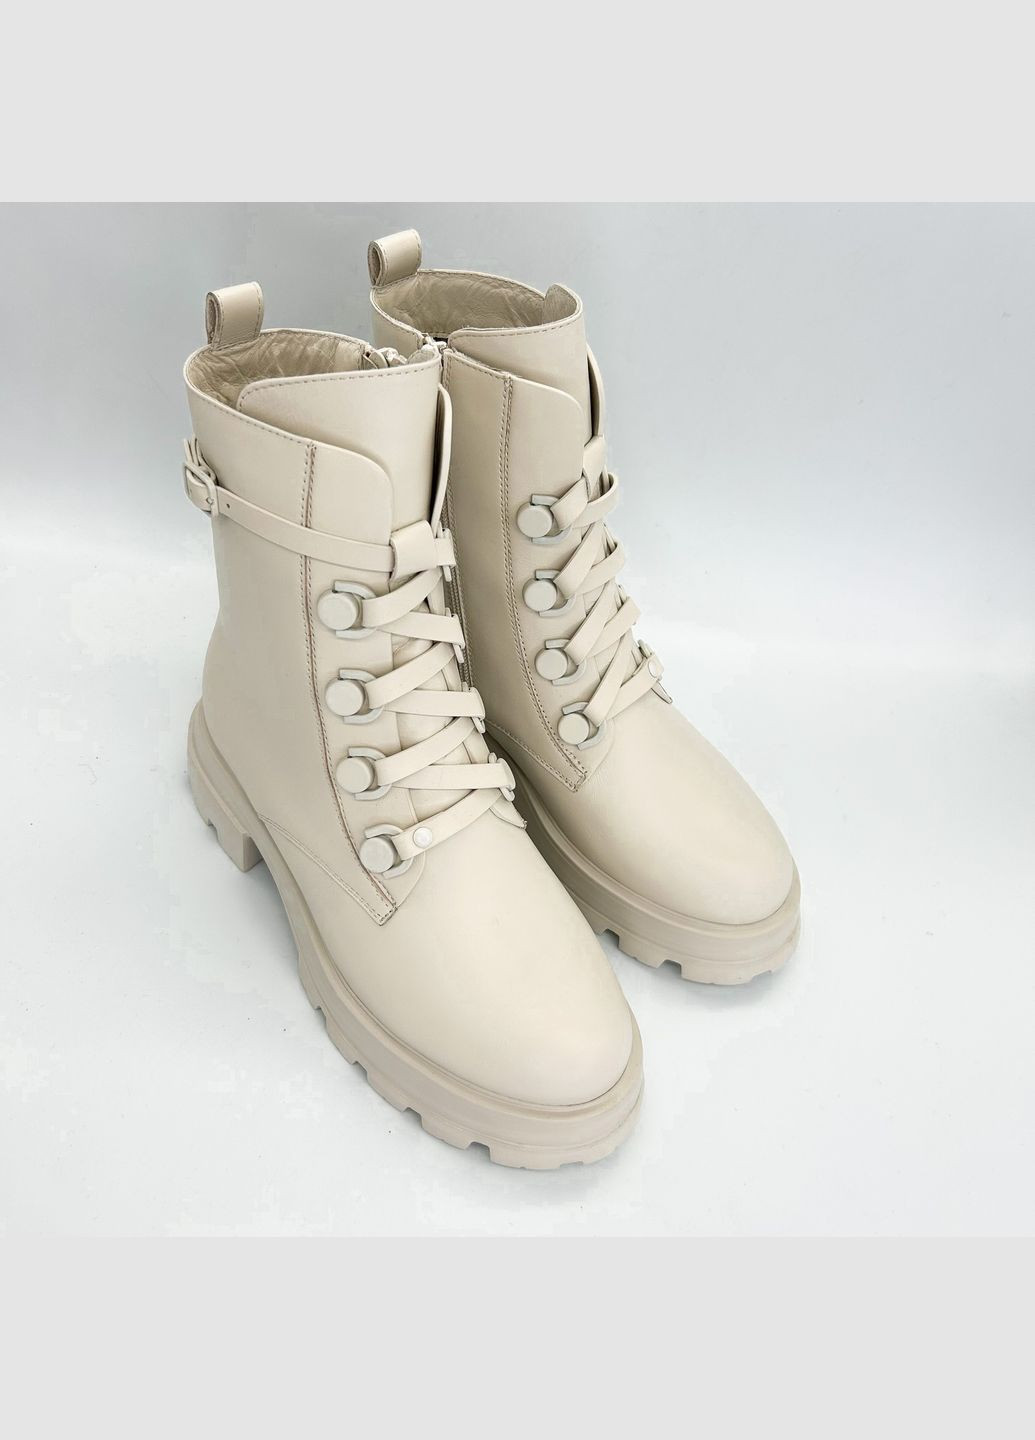 Зимние ботинки (р) кожа 0-1-1-1201-201a-04w Danler